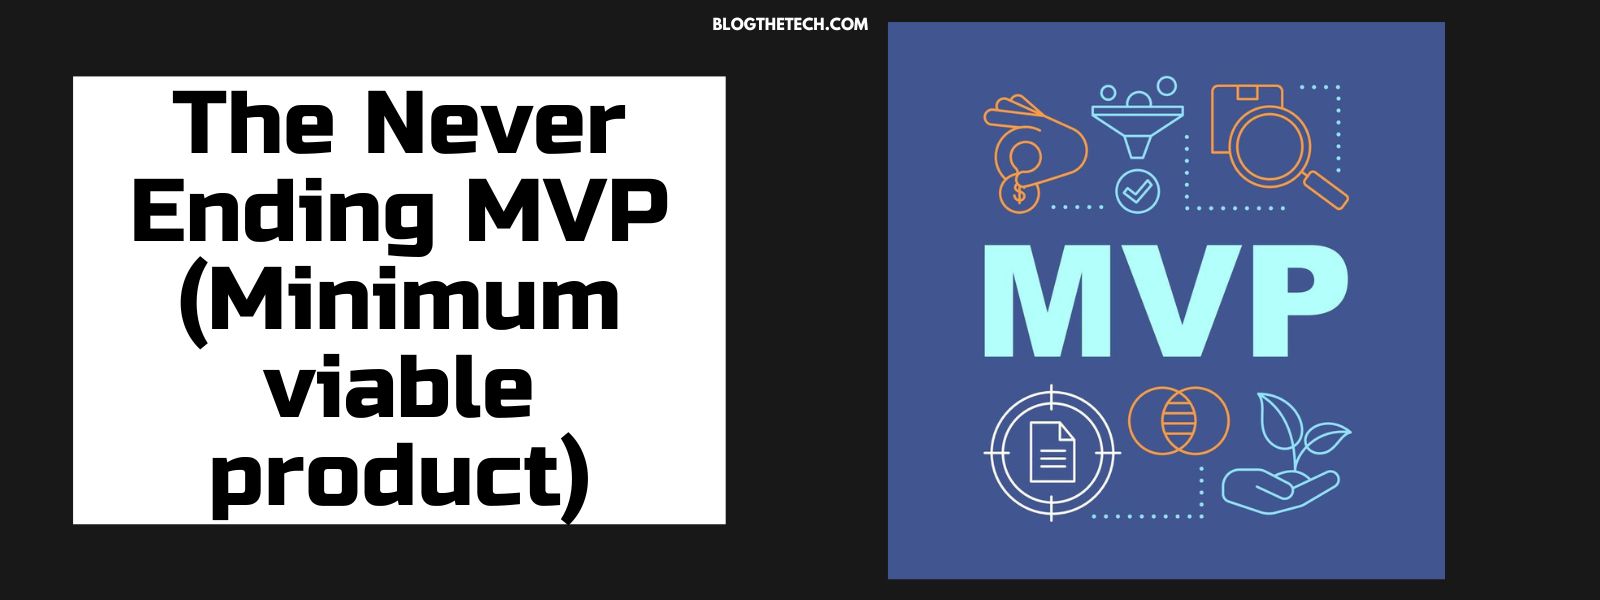 The Never Ending MVP (Minimum viable product)